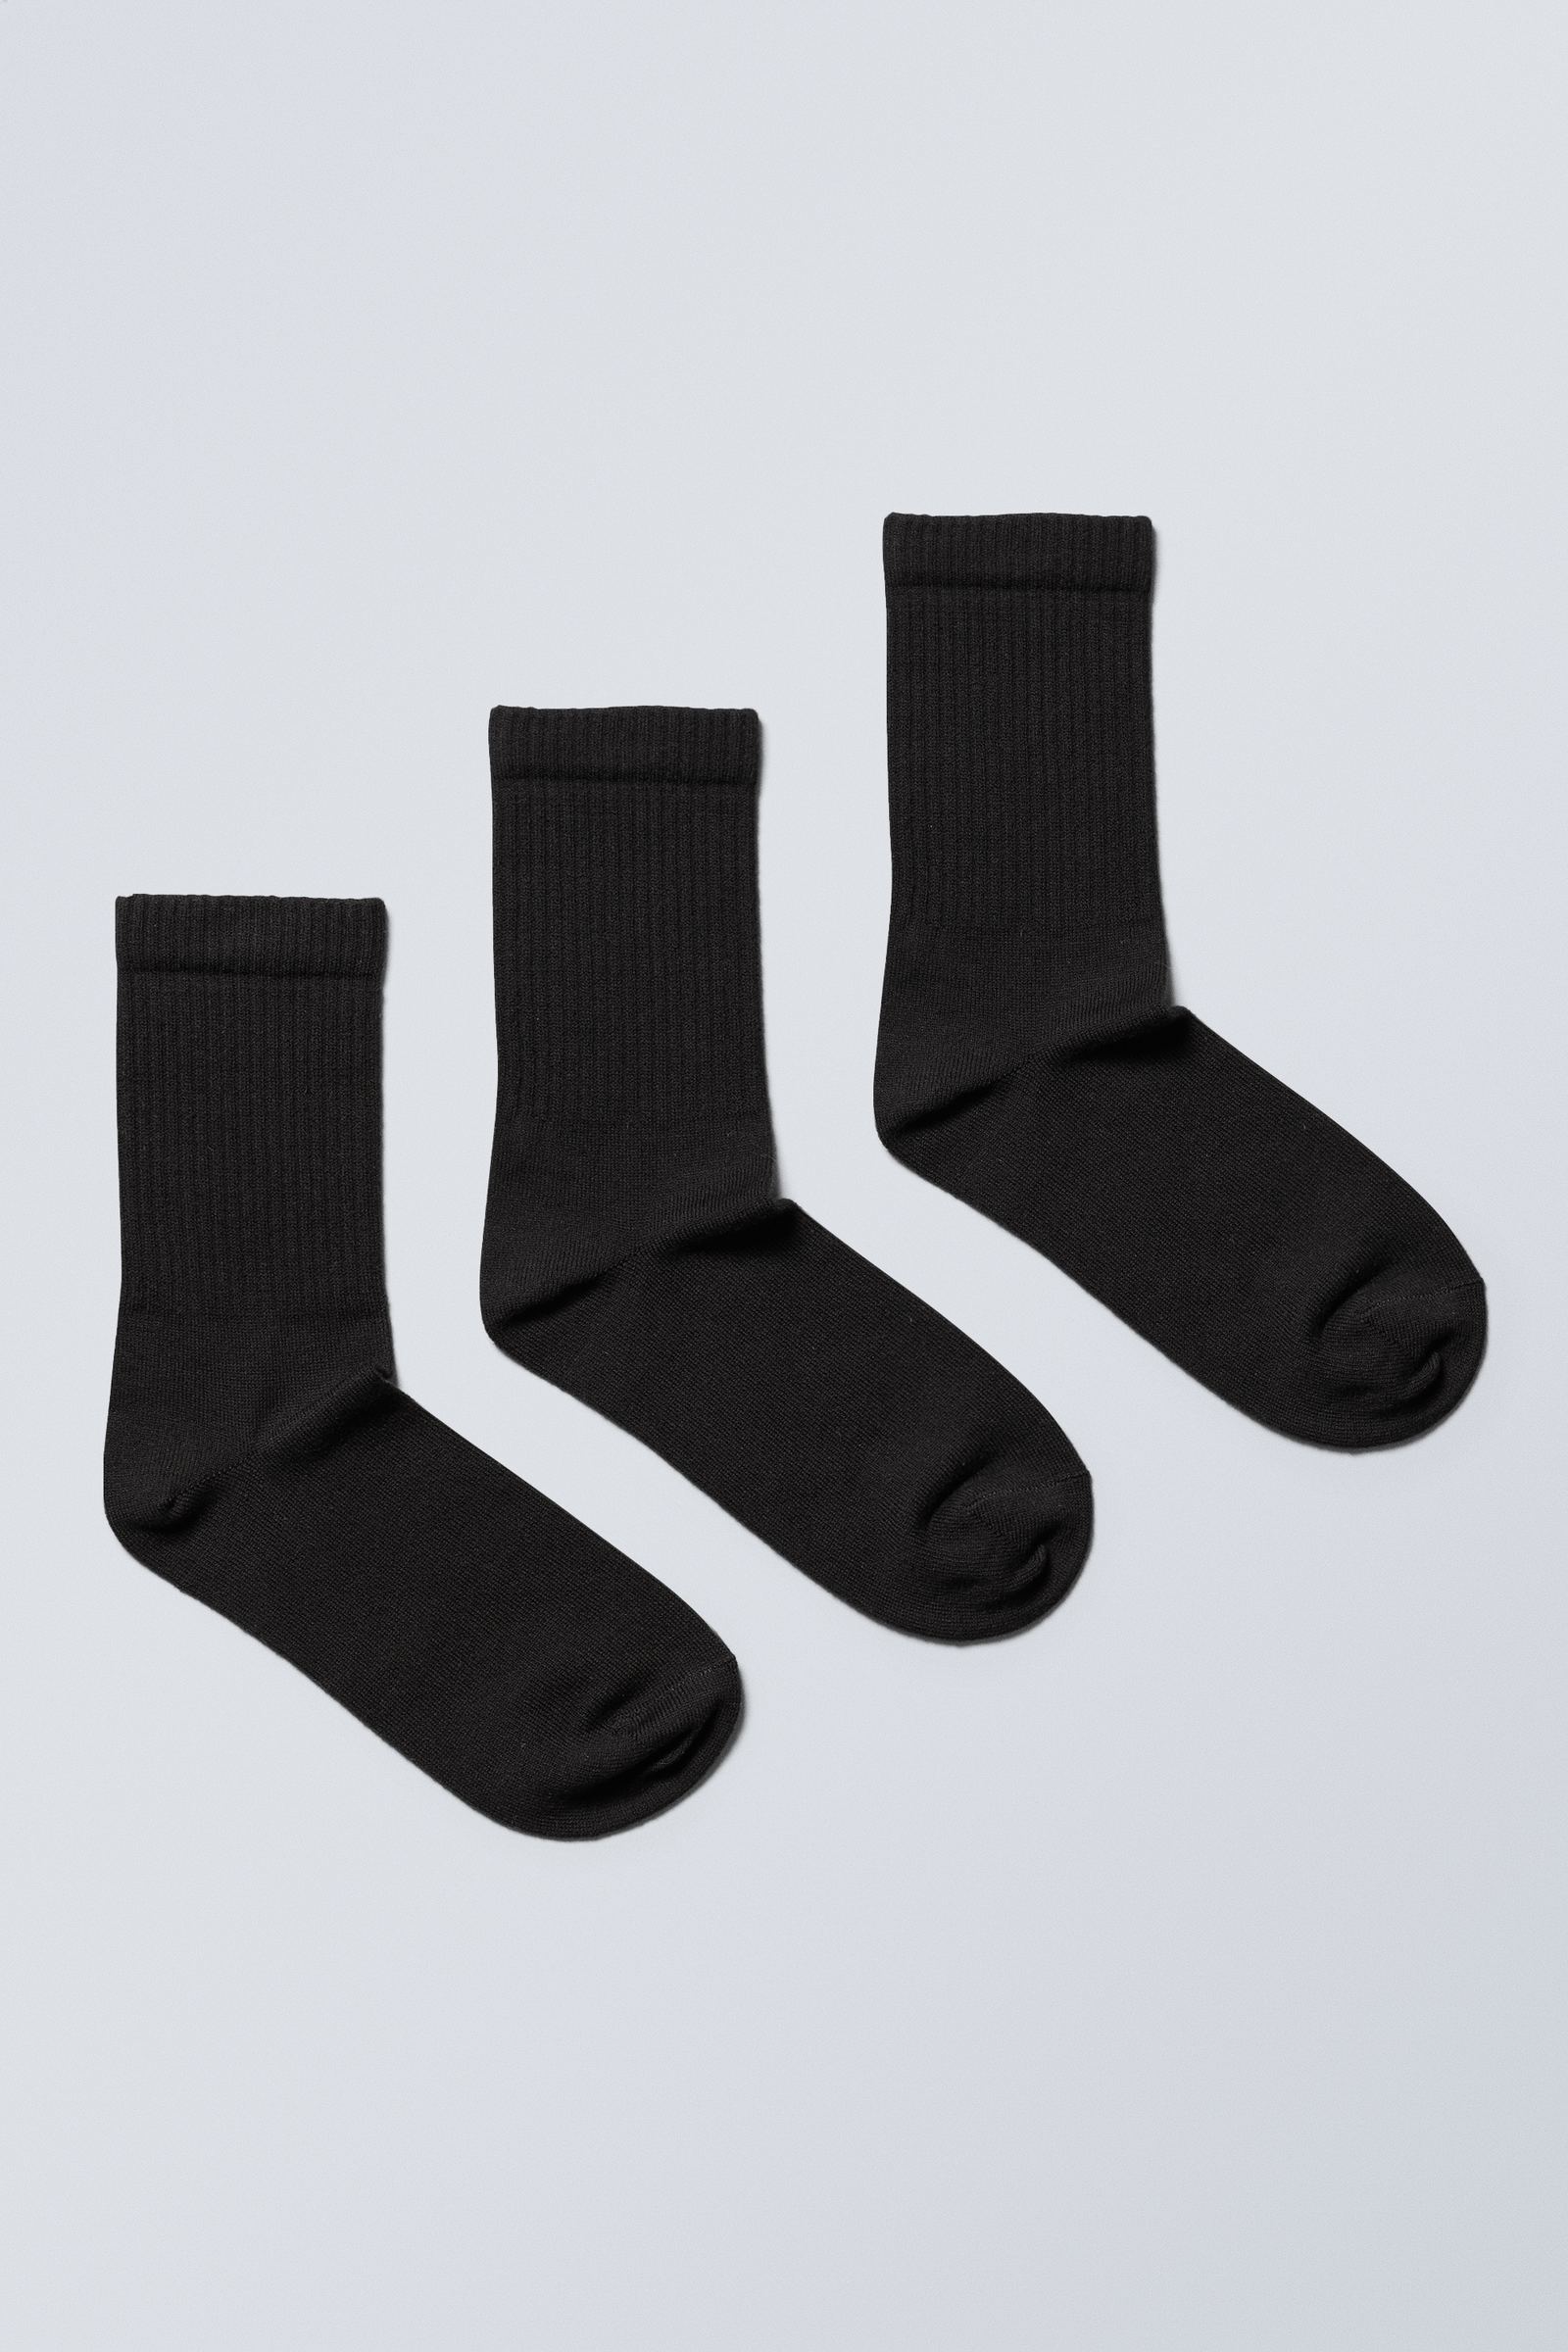 #272628 - Eleven Socks 3pack